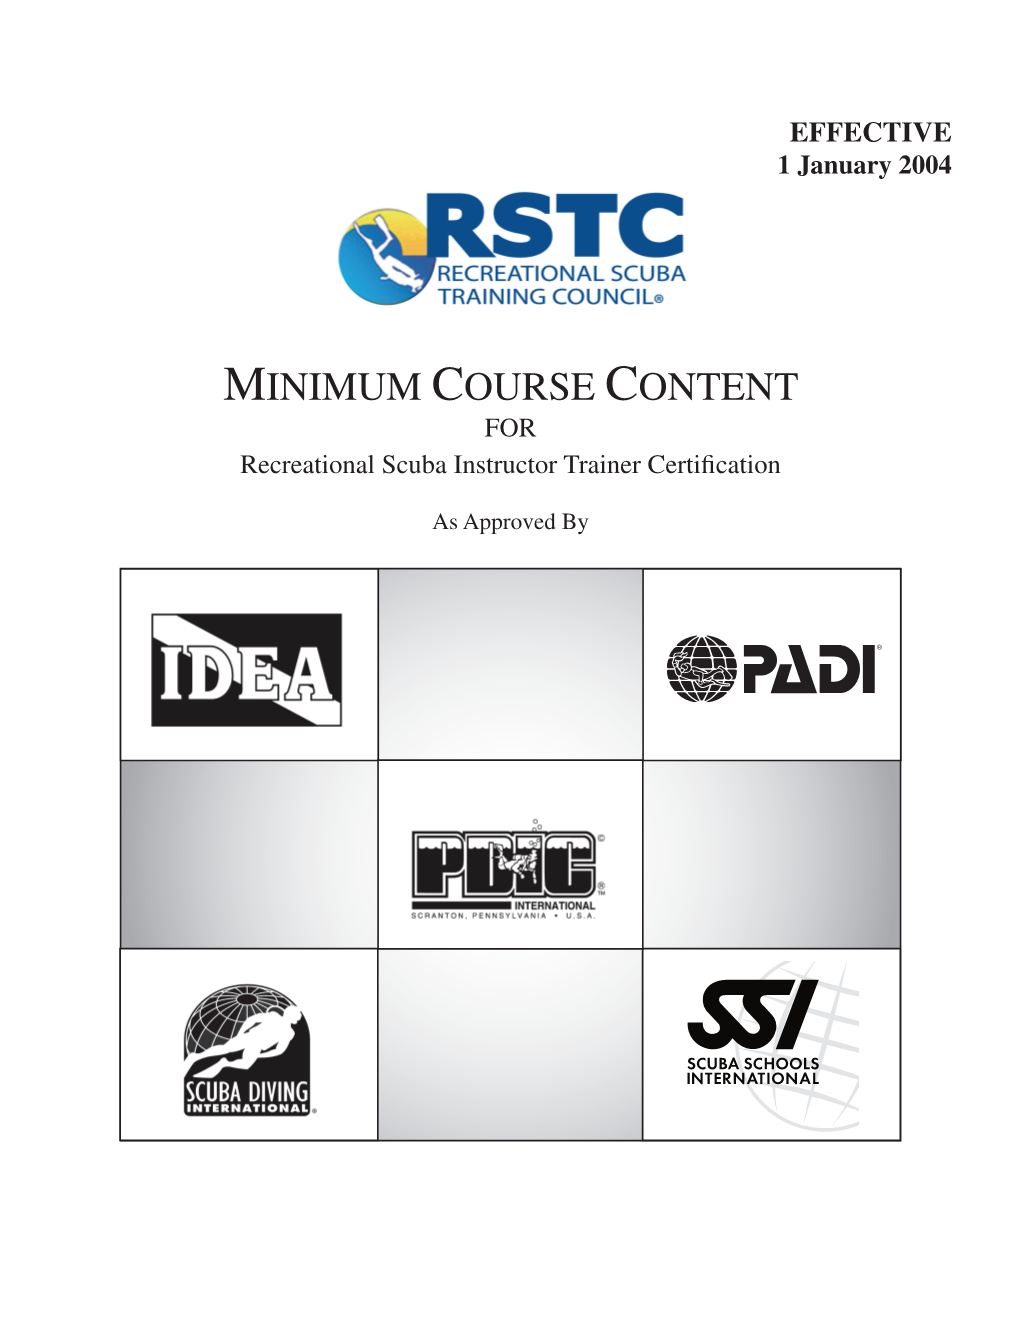 MINIMUM COURSE CONTENT for Recreational Scuba Instructor Trainer Certification